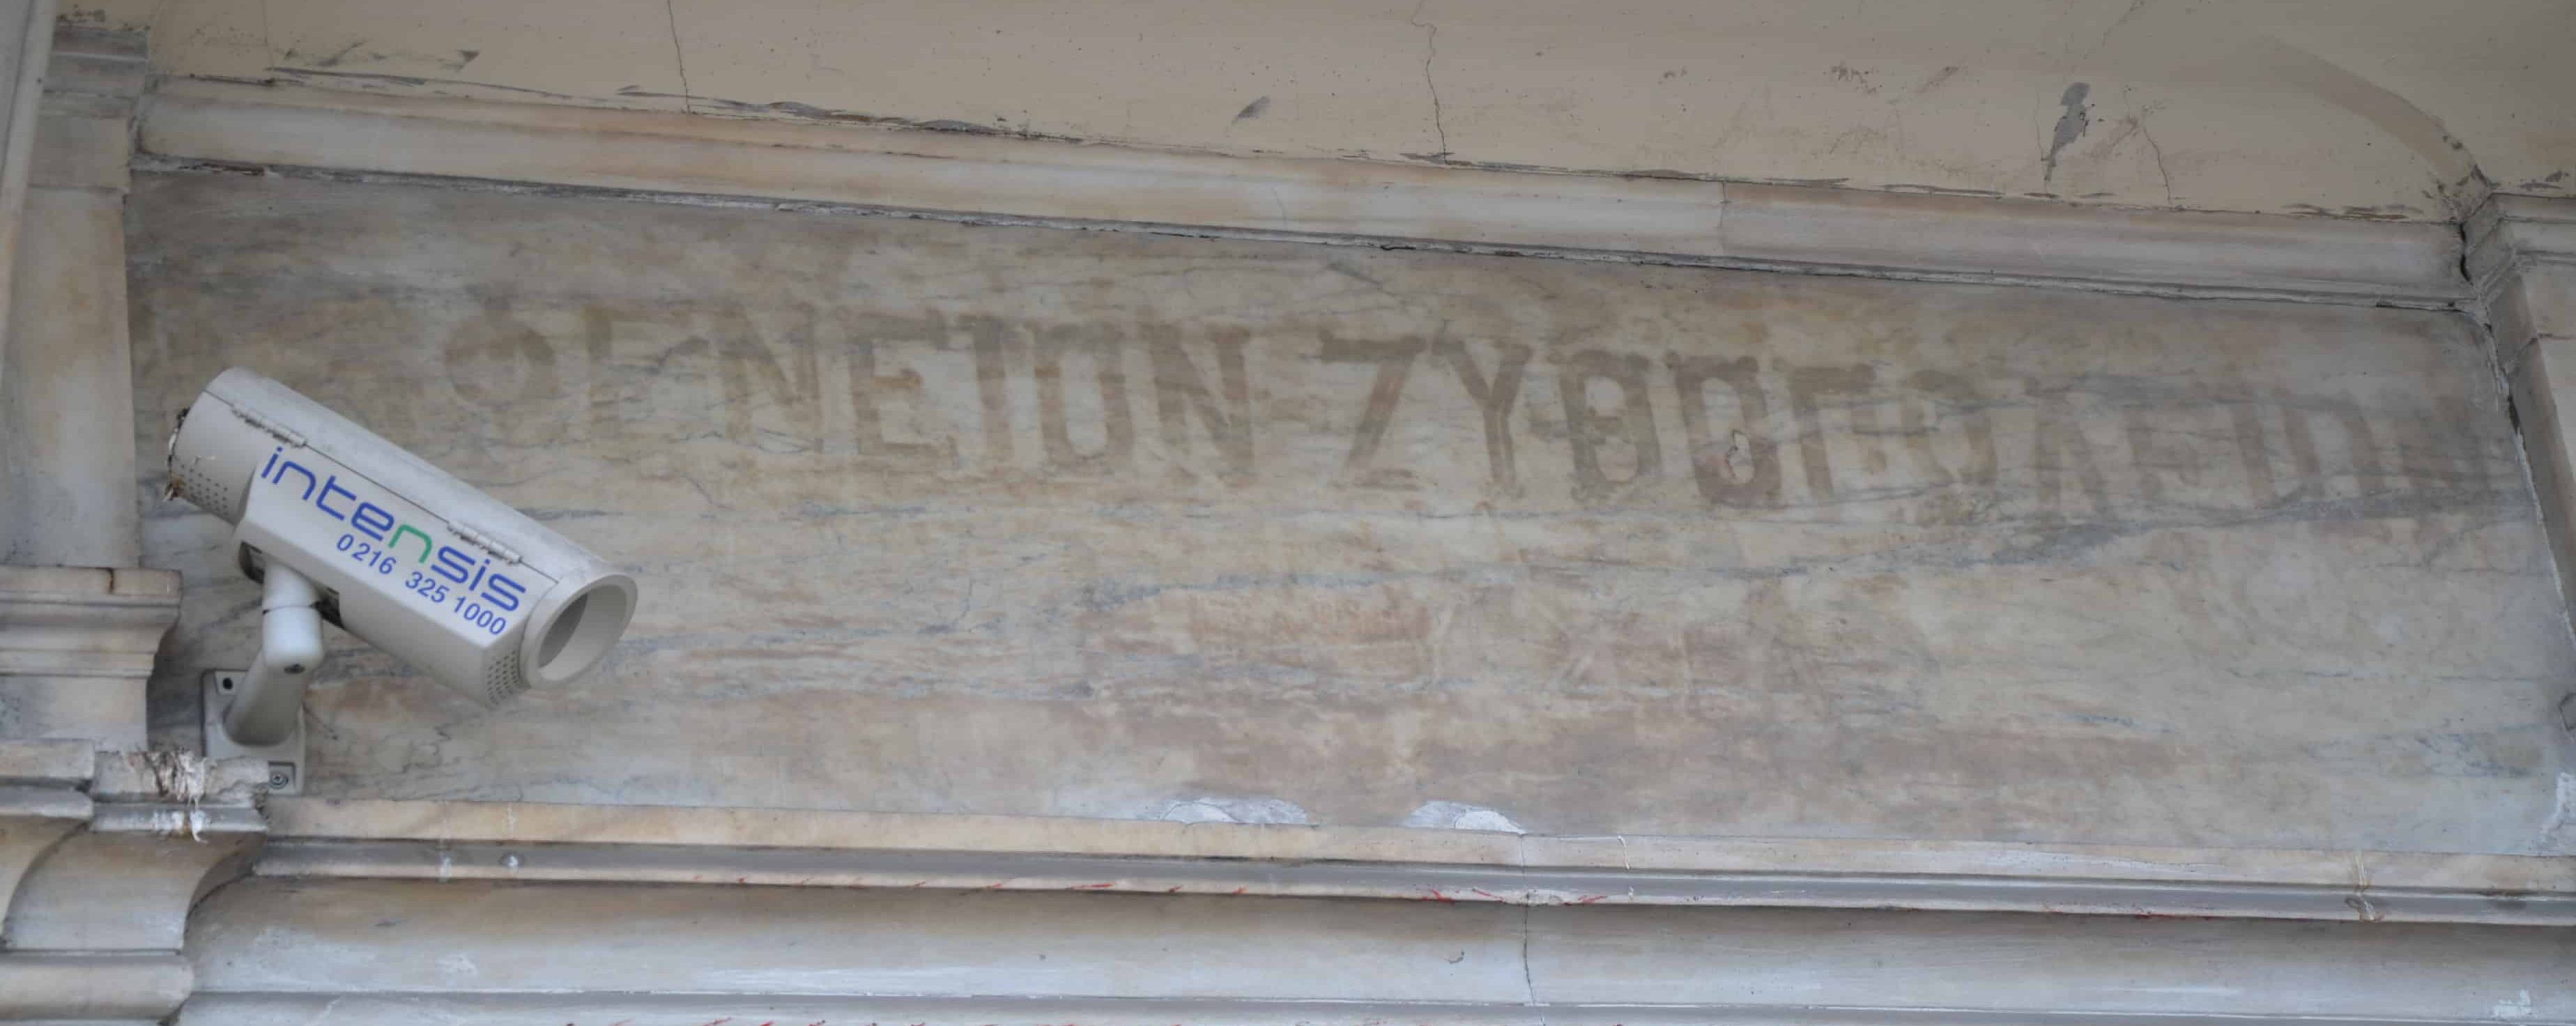 Sign for Café Zythopoleion on Passage Petits-Champs in Tepebaşı, Istanbul, Turkey